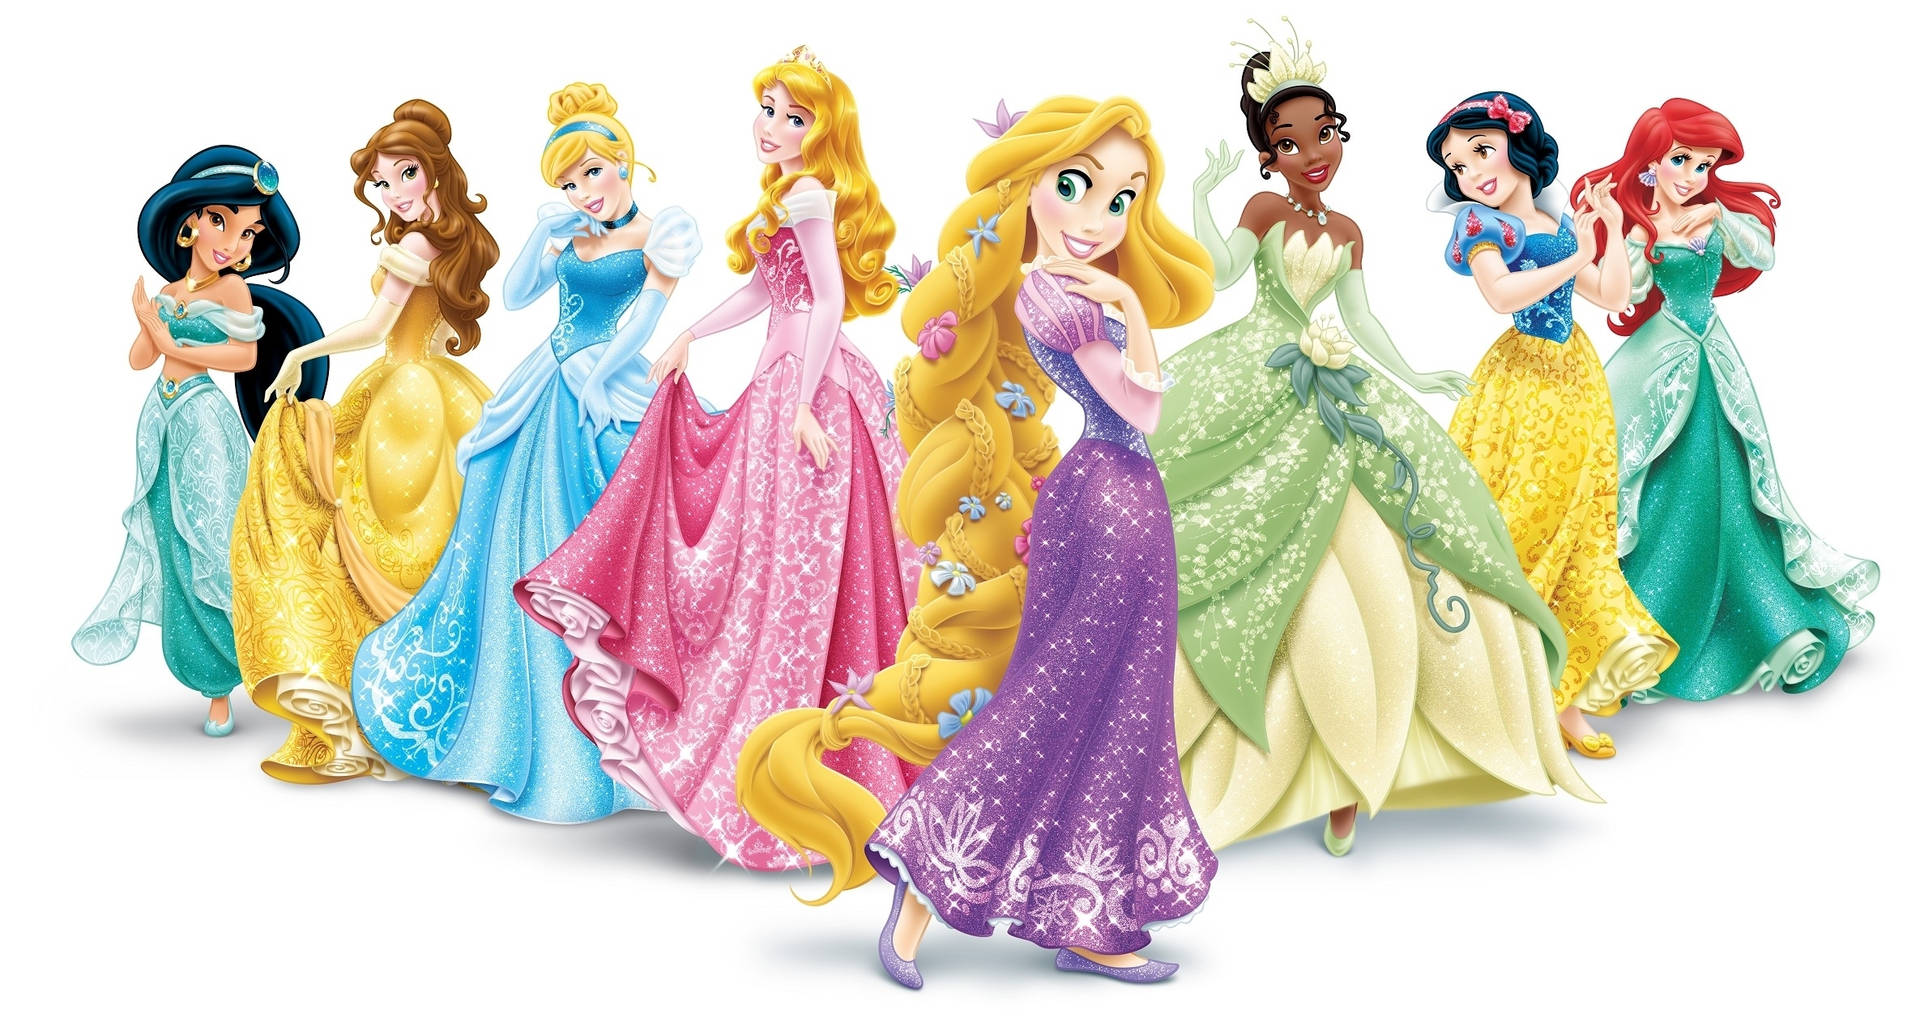 Disney Princesses Digital Art Background